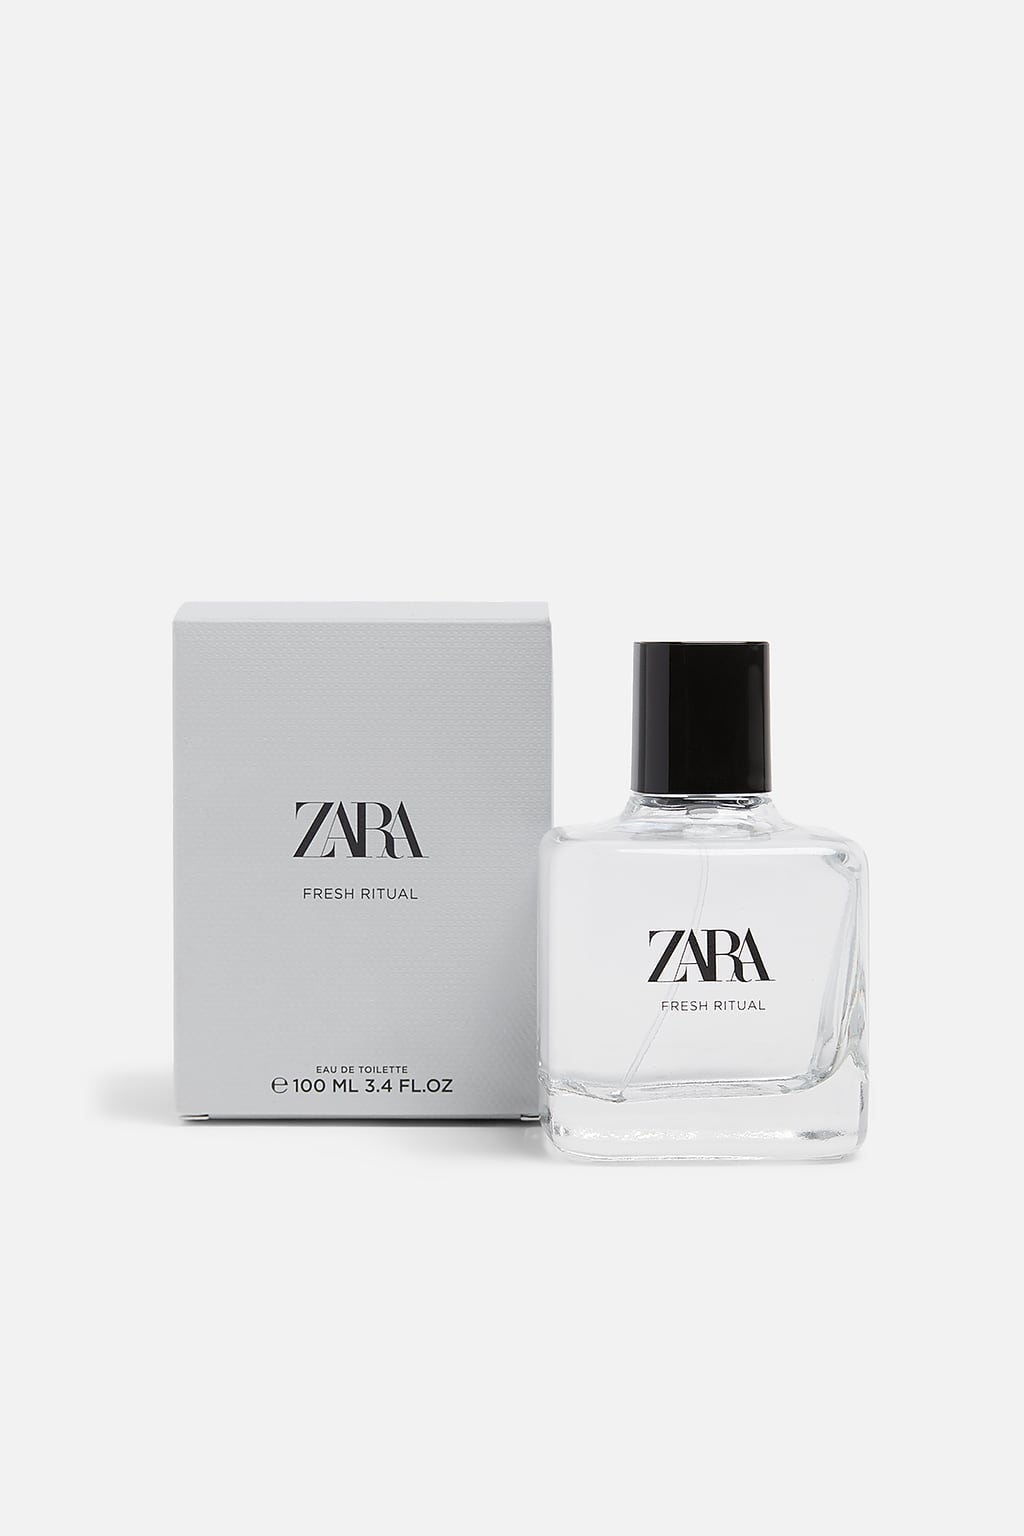 Zara Fresh Ritual Eau de Toilette